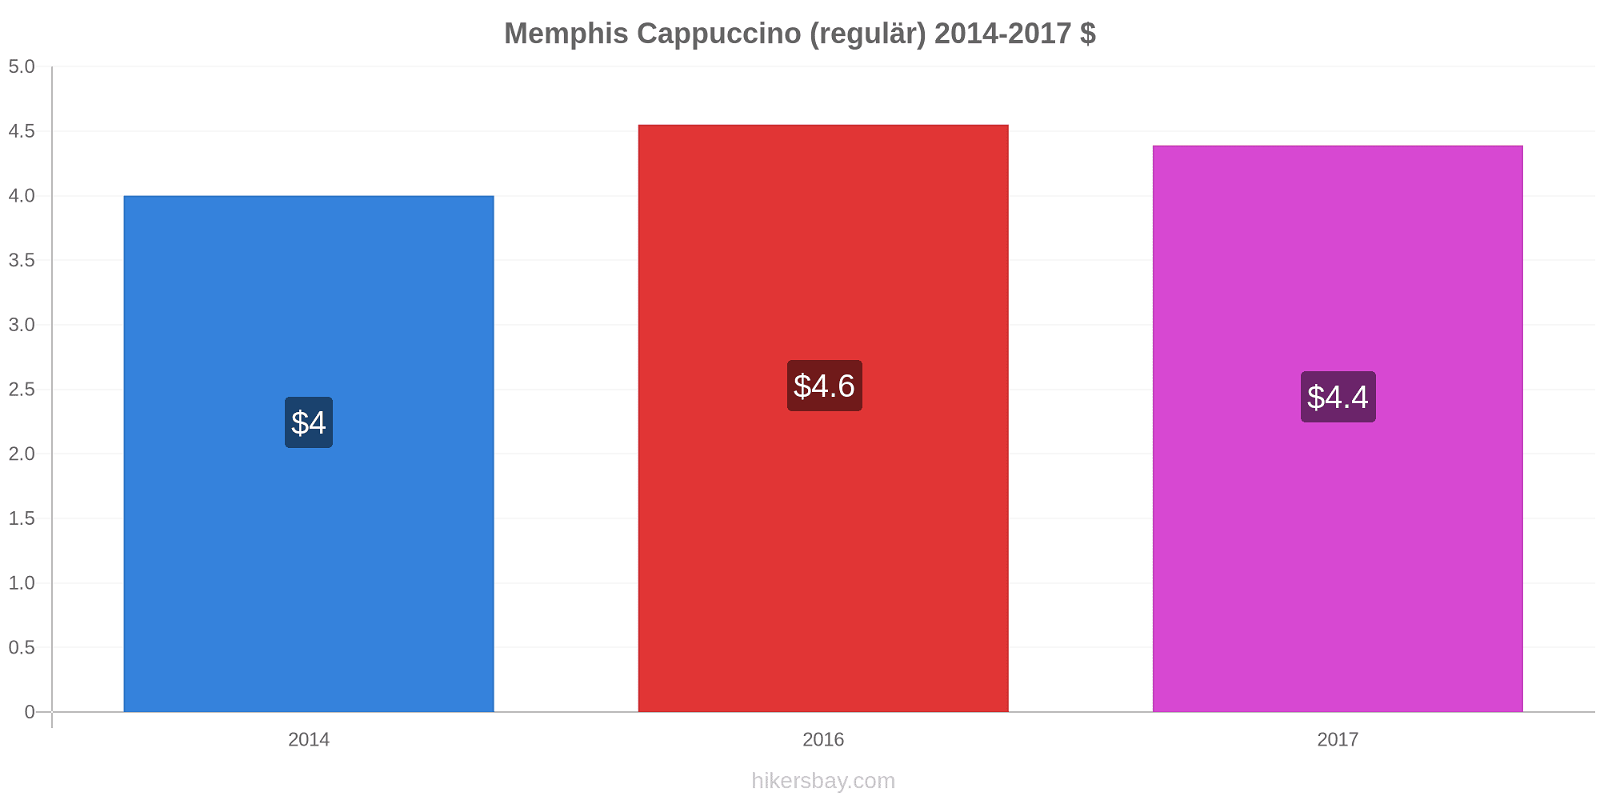 Memphis Preisänderungen Cappuccino (regulär) hikersbay.com